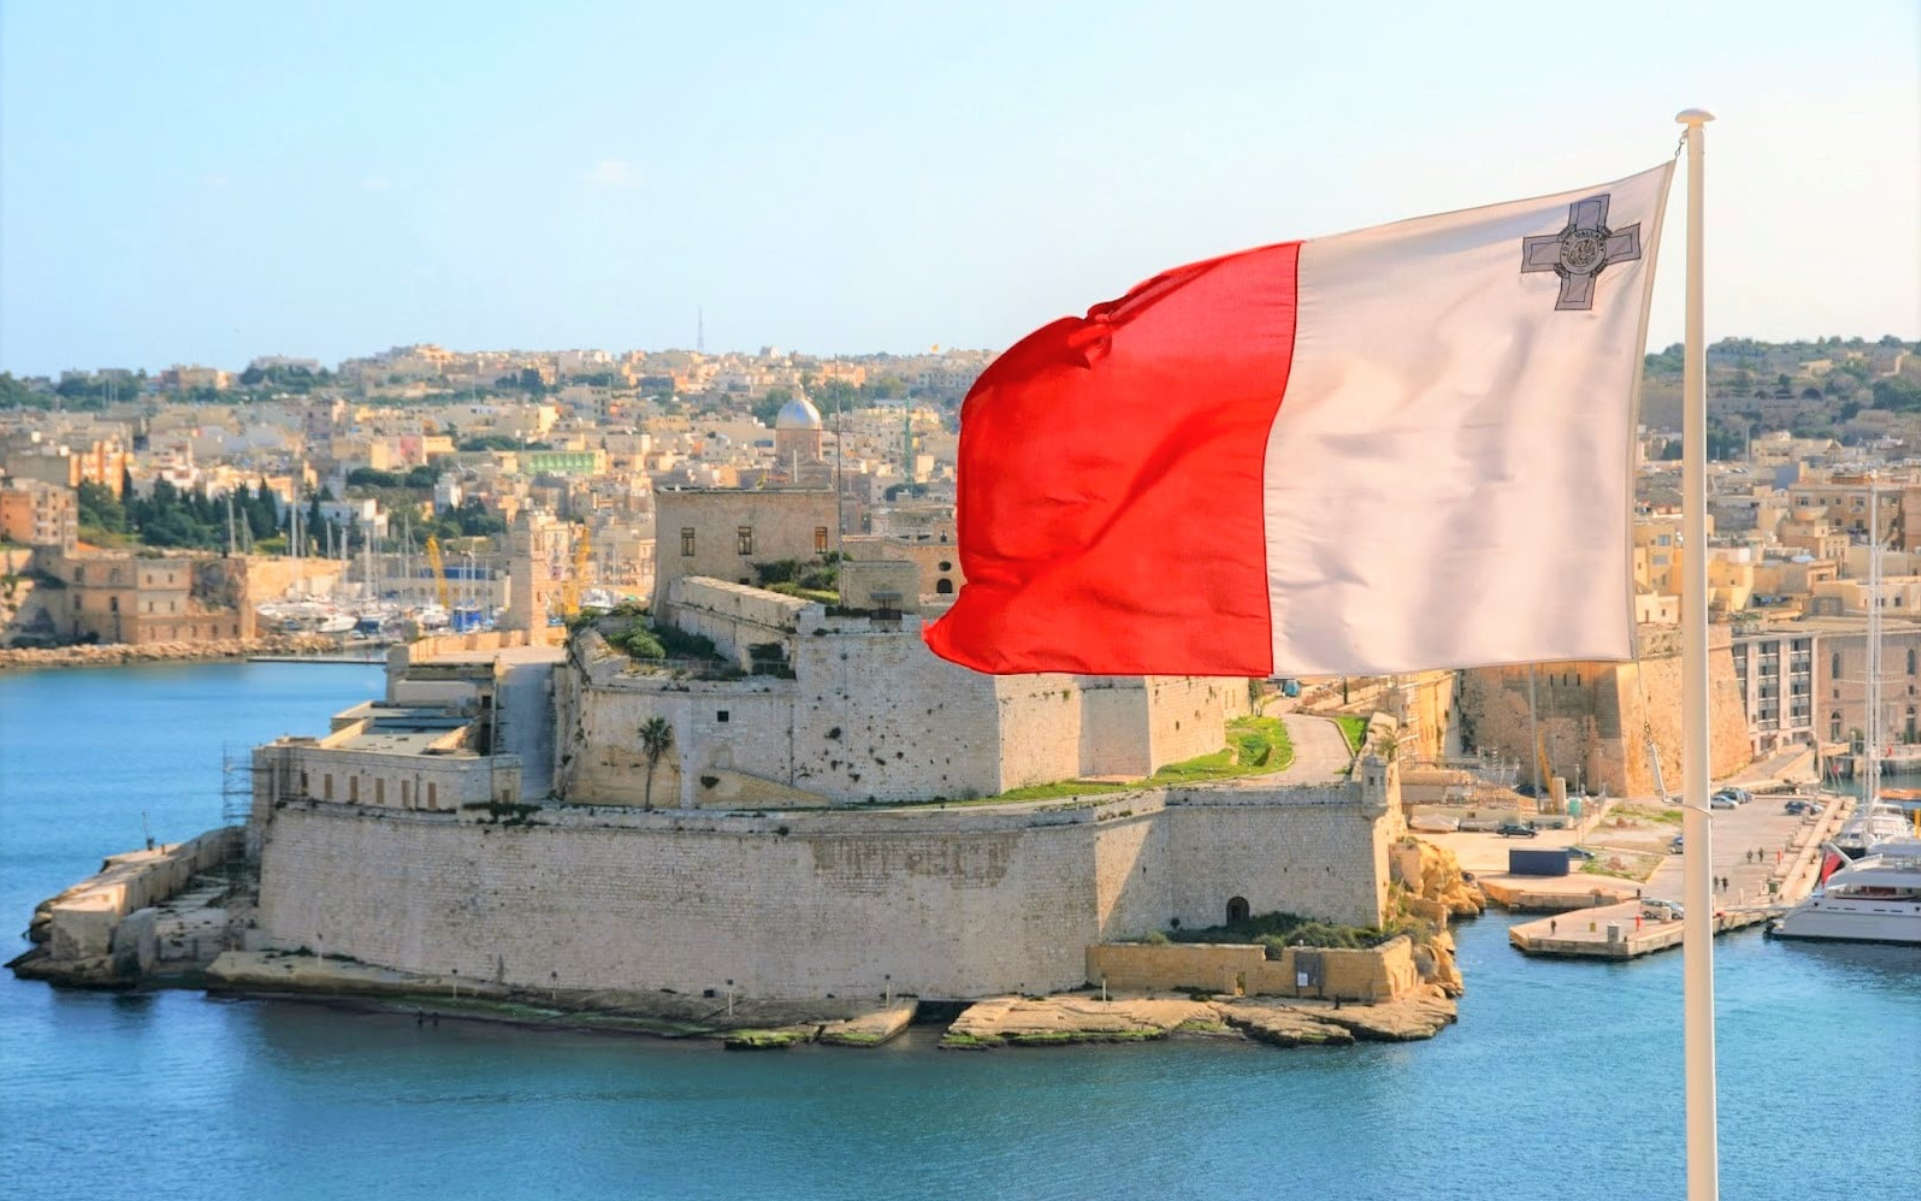 Legalizacja marihuany na Malcie